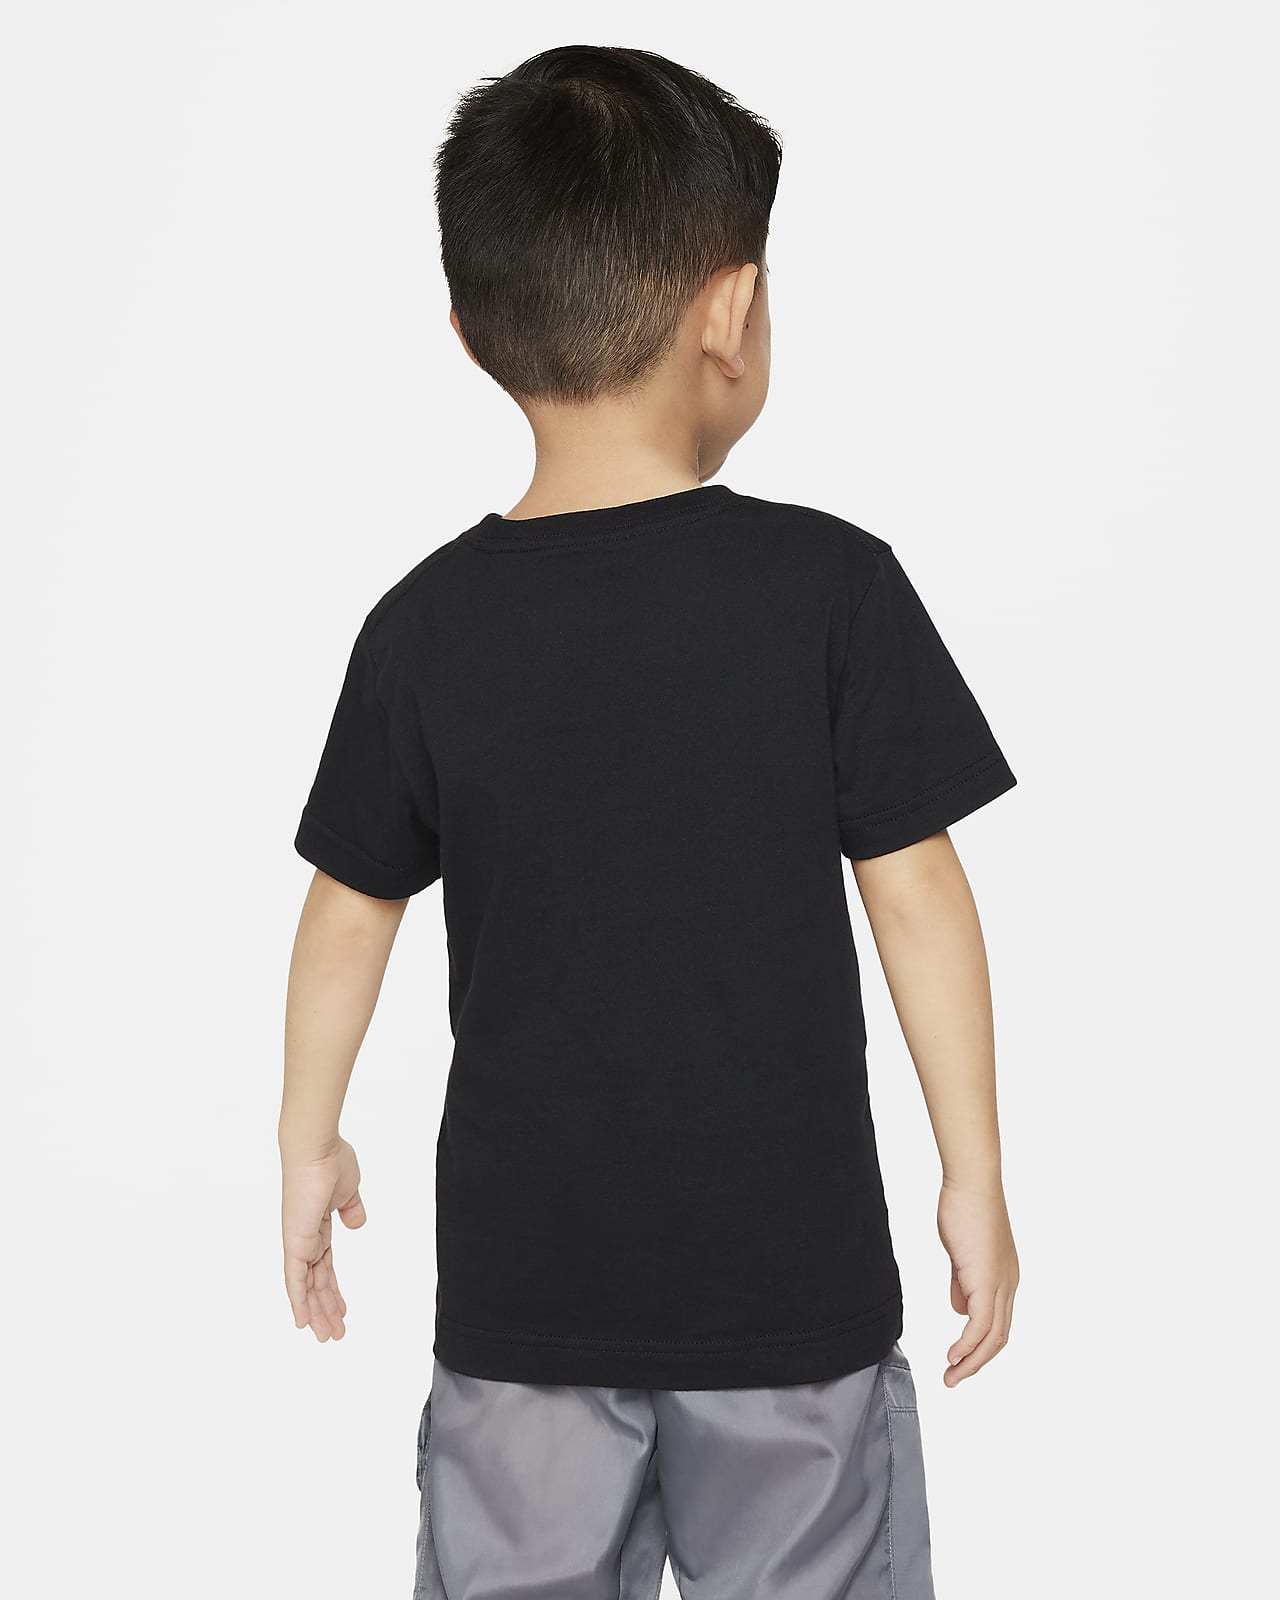 Nike Futura Tee für jüngere DE Nike T-Shirt Kinder